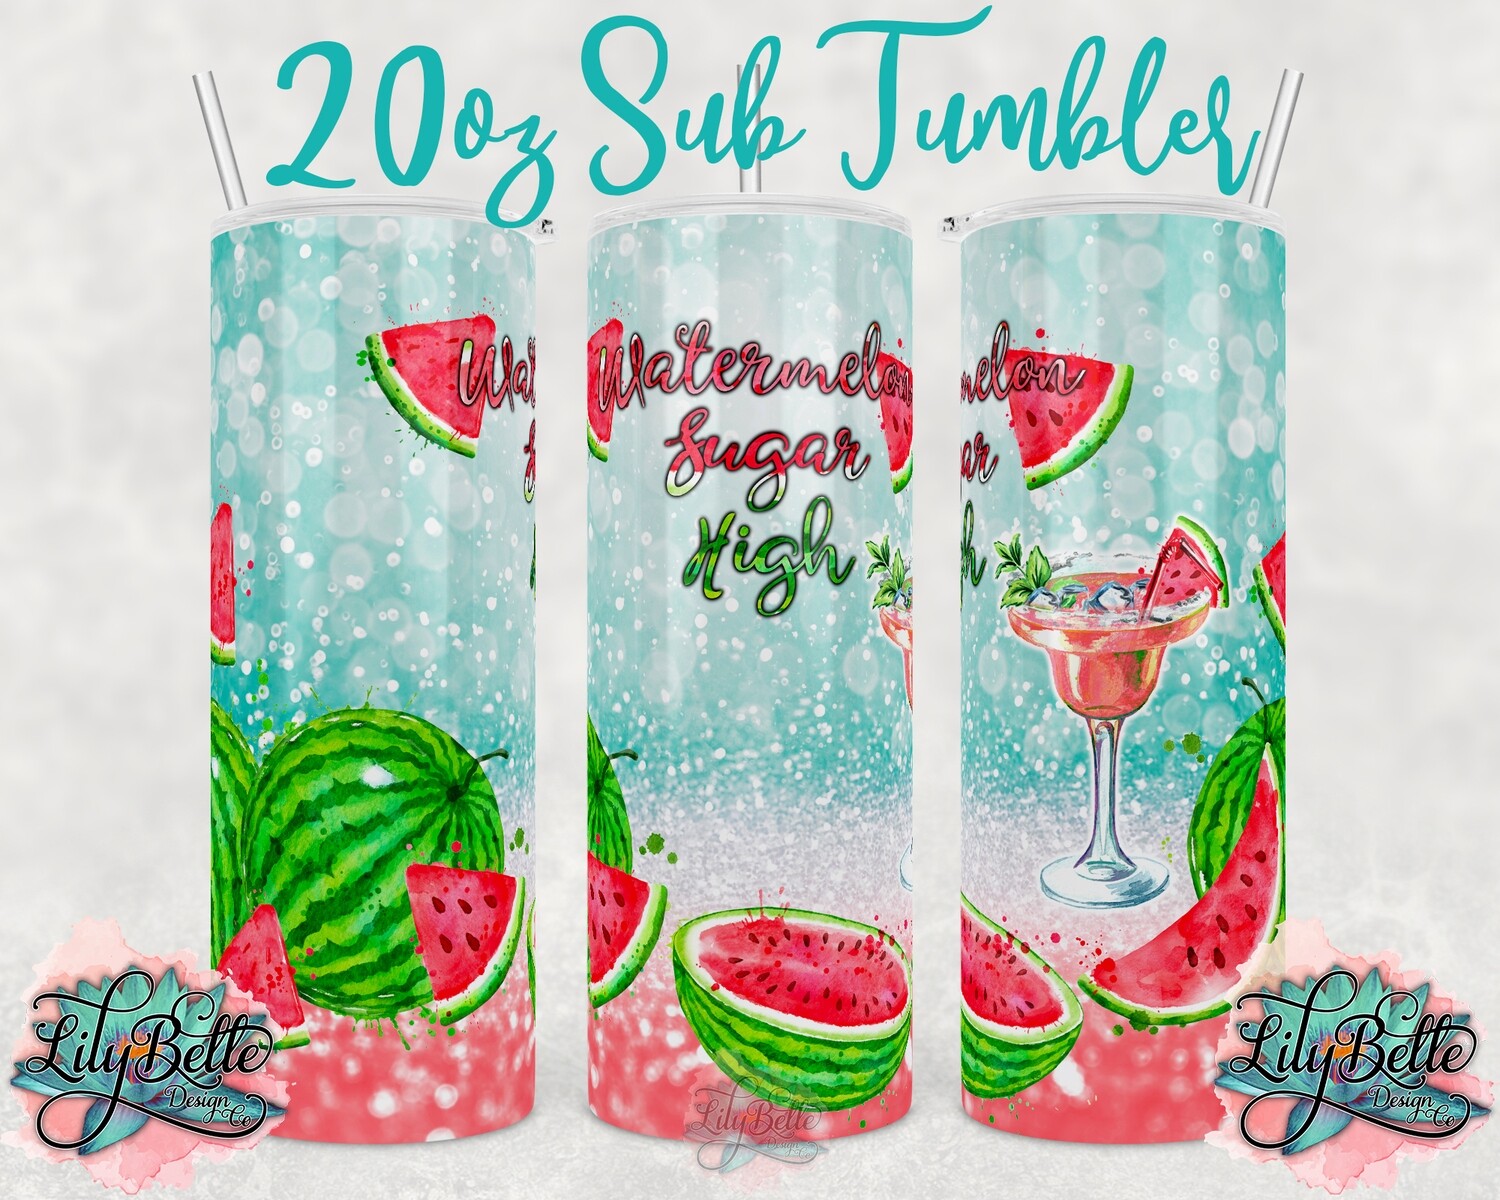 Watermelon Sugar High
20oz Sublimation Tumbler